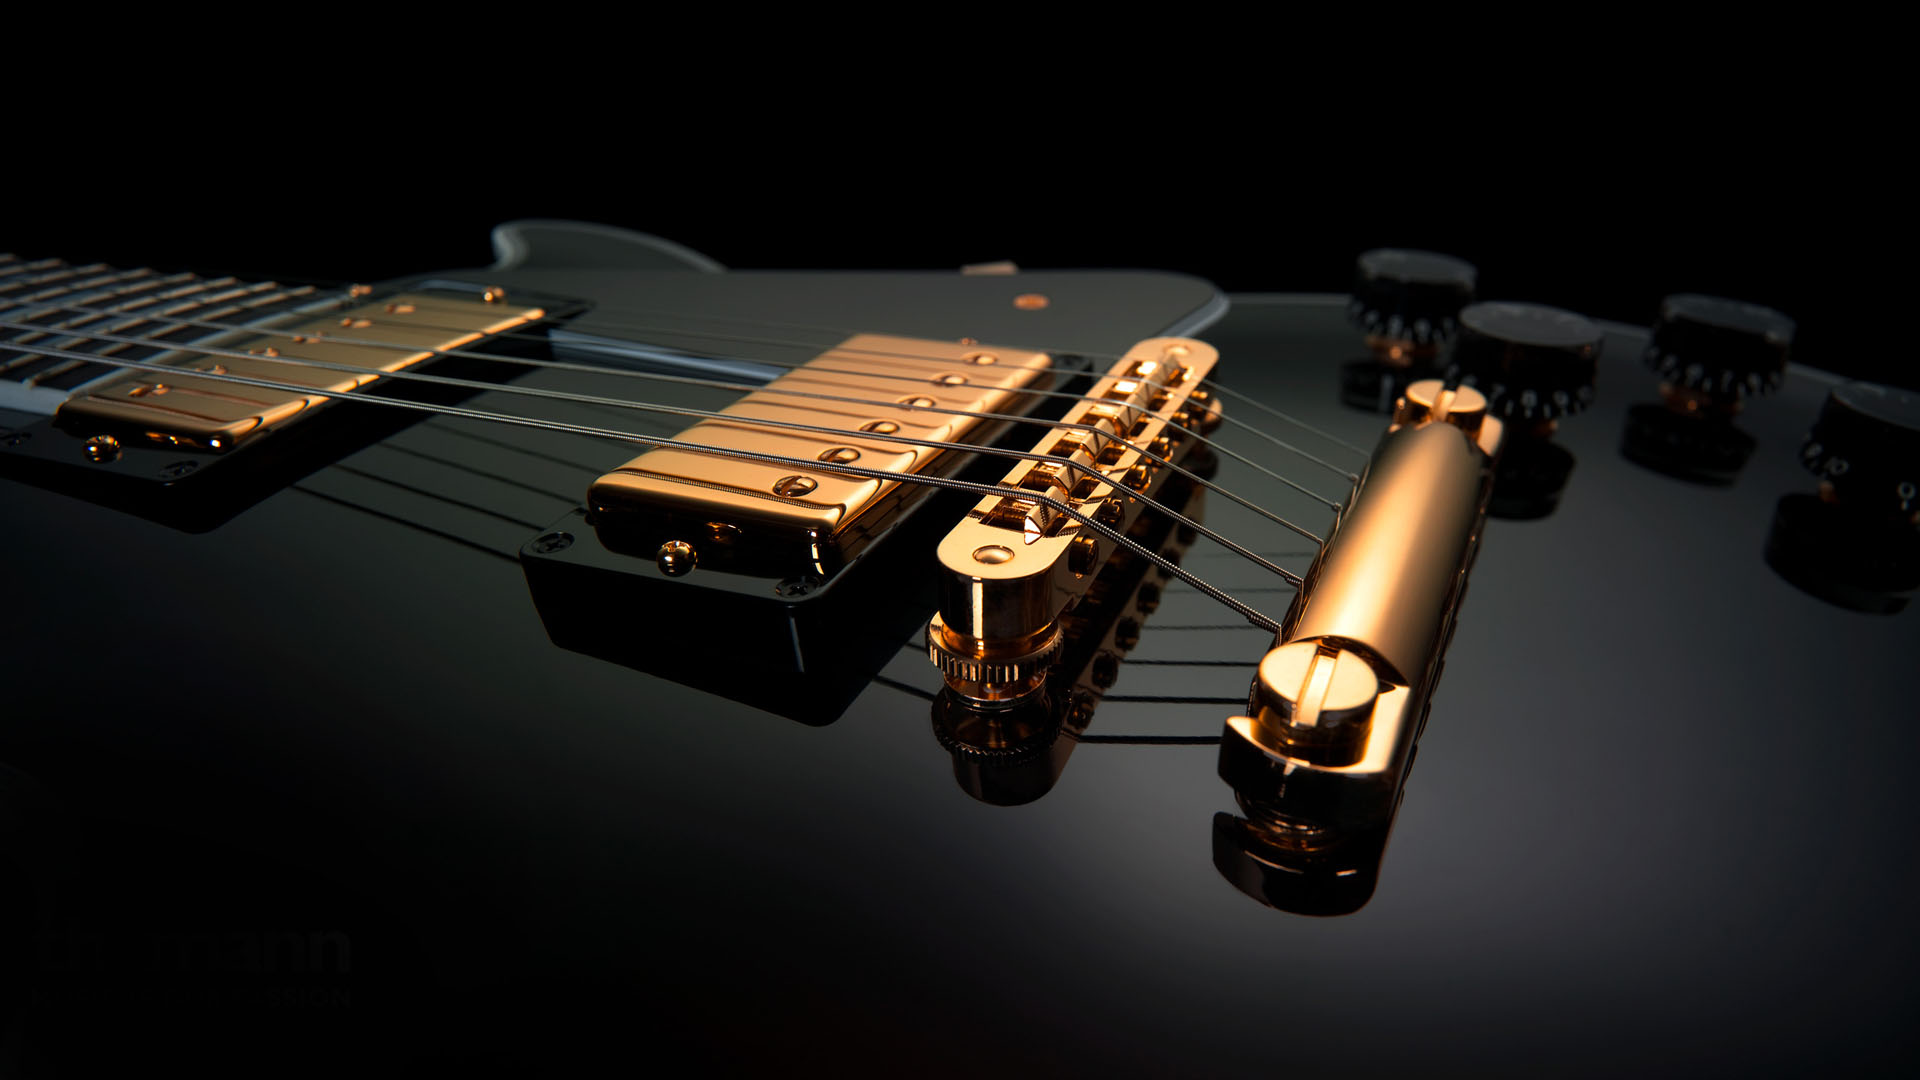 Gibson Guitar Wallpaper HD In Music Imageci